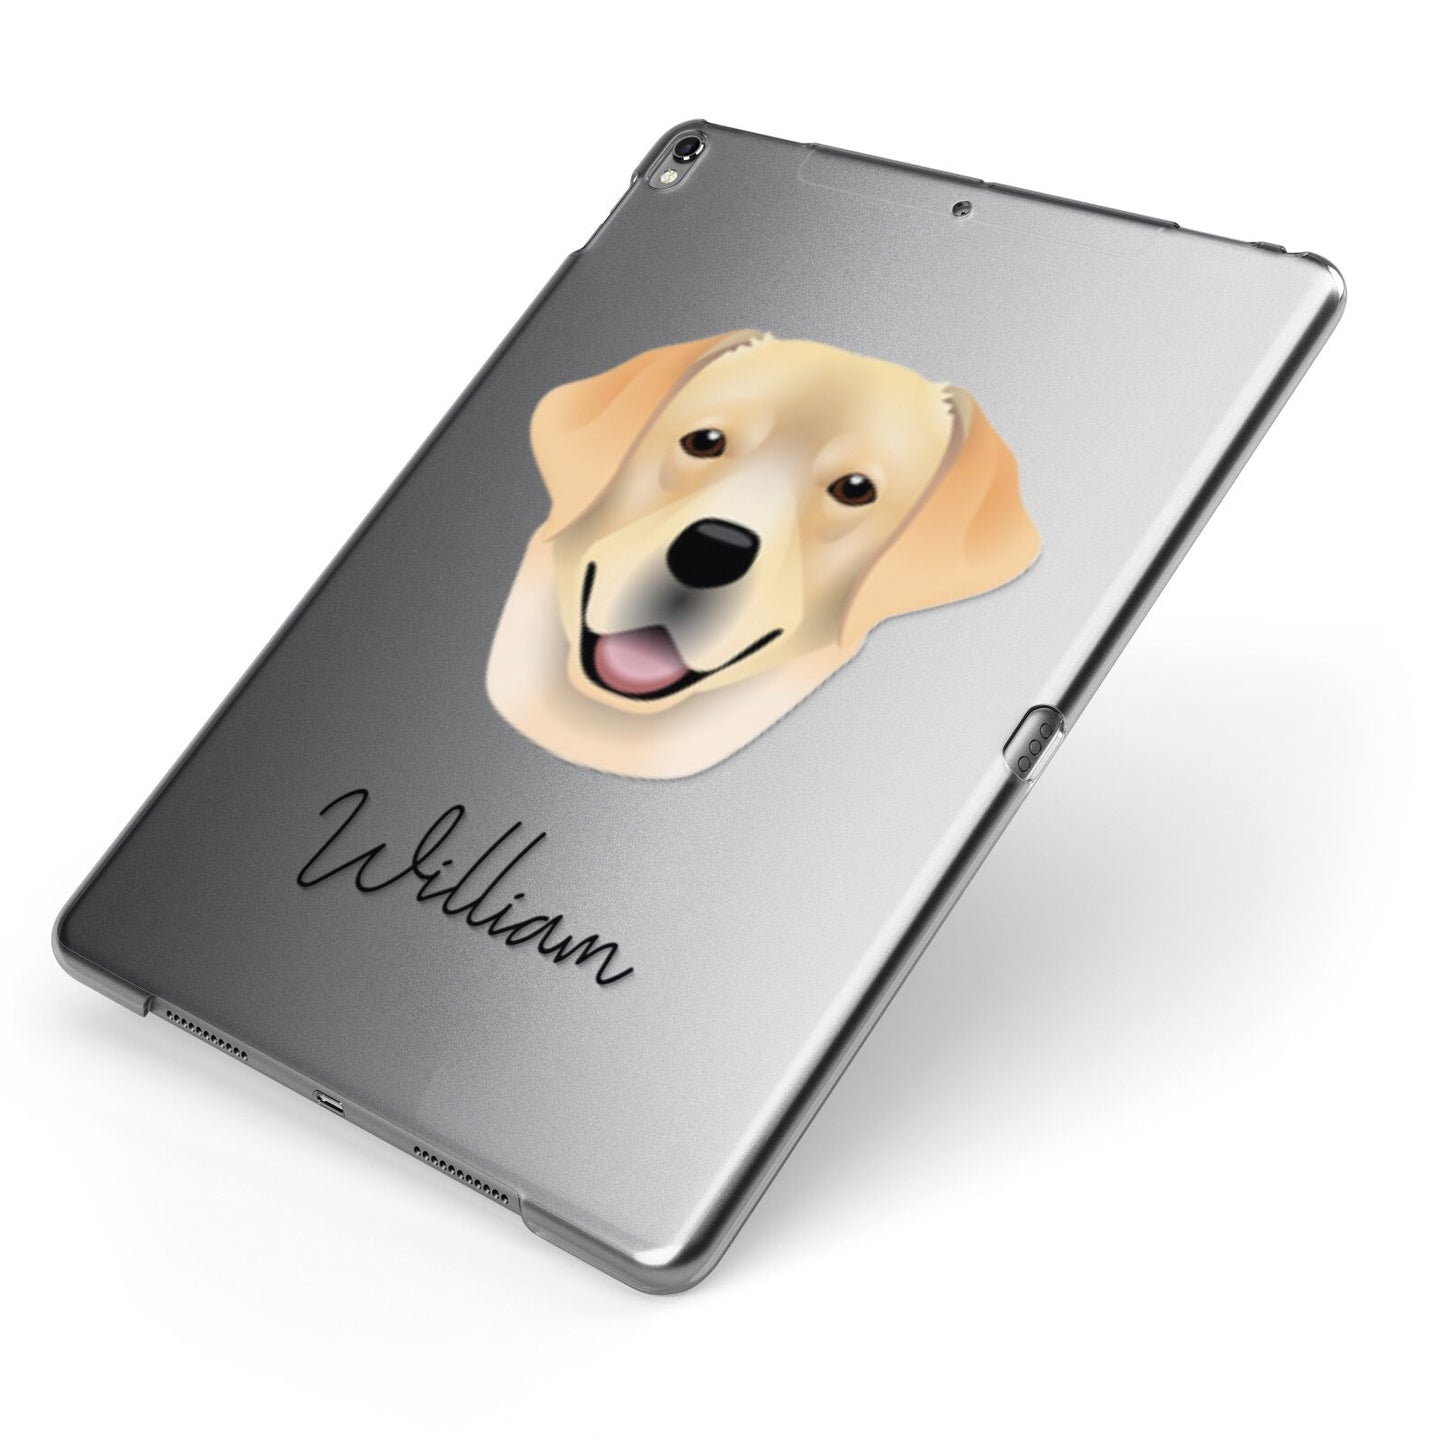 Golden Labrador Personalised Apple iPad Case on Grey iPad Side View